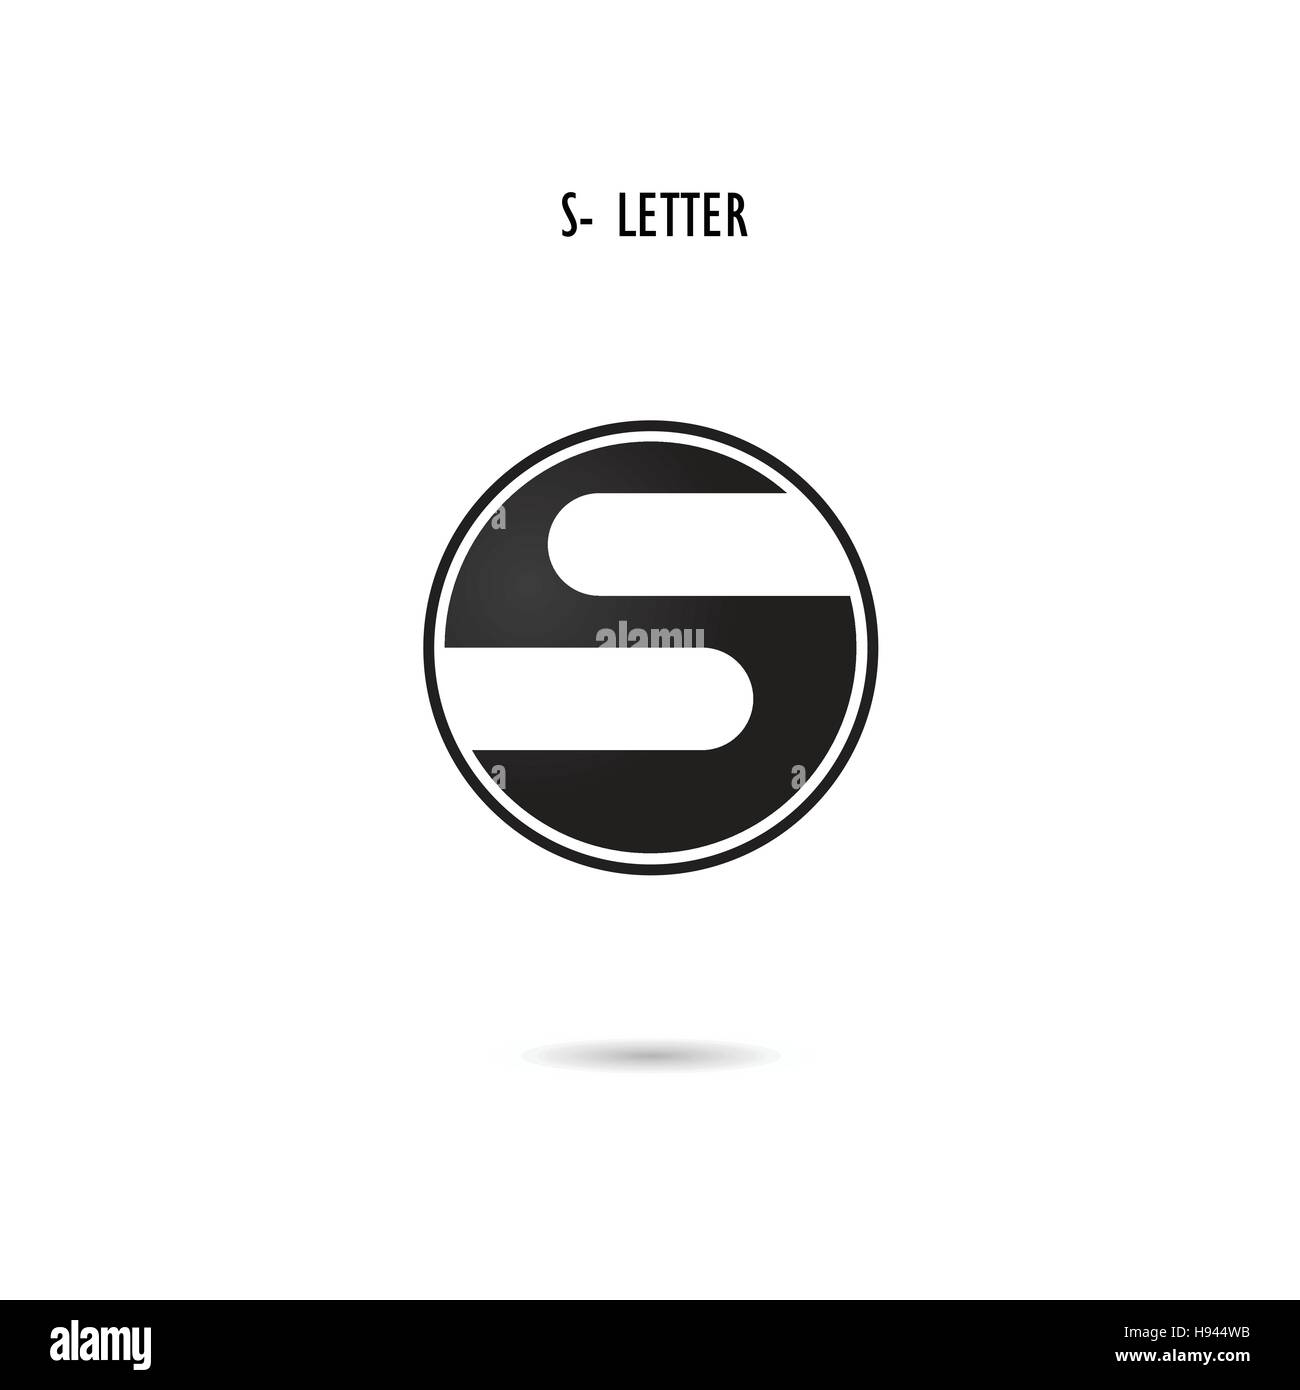 Letter S Logo Lettermark Monogram Typeface Type Emblem Character Trademark  Stock Illustration - Download Image Now - iStock